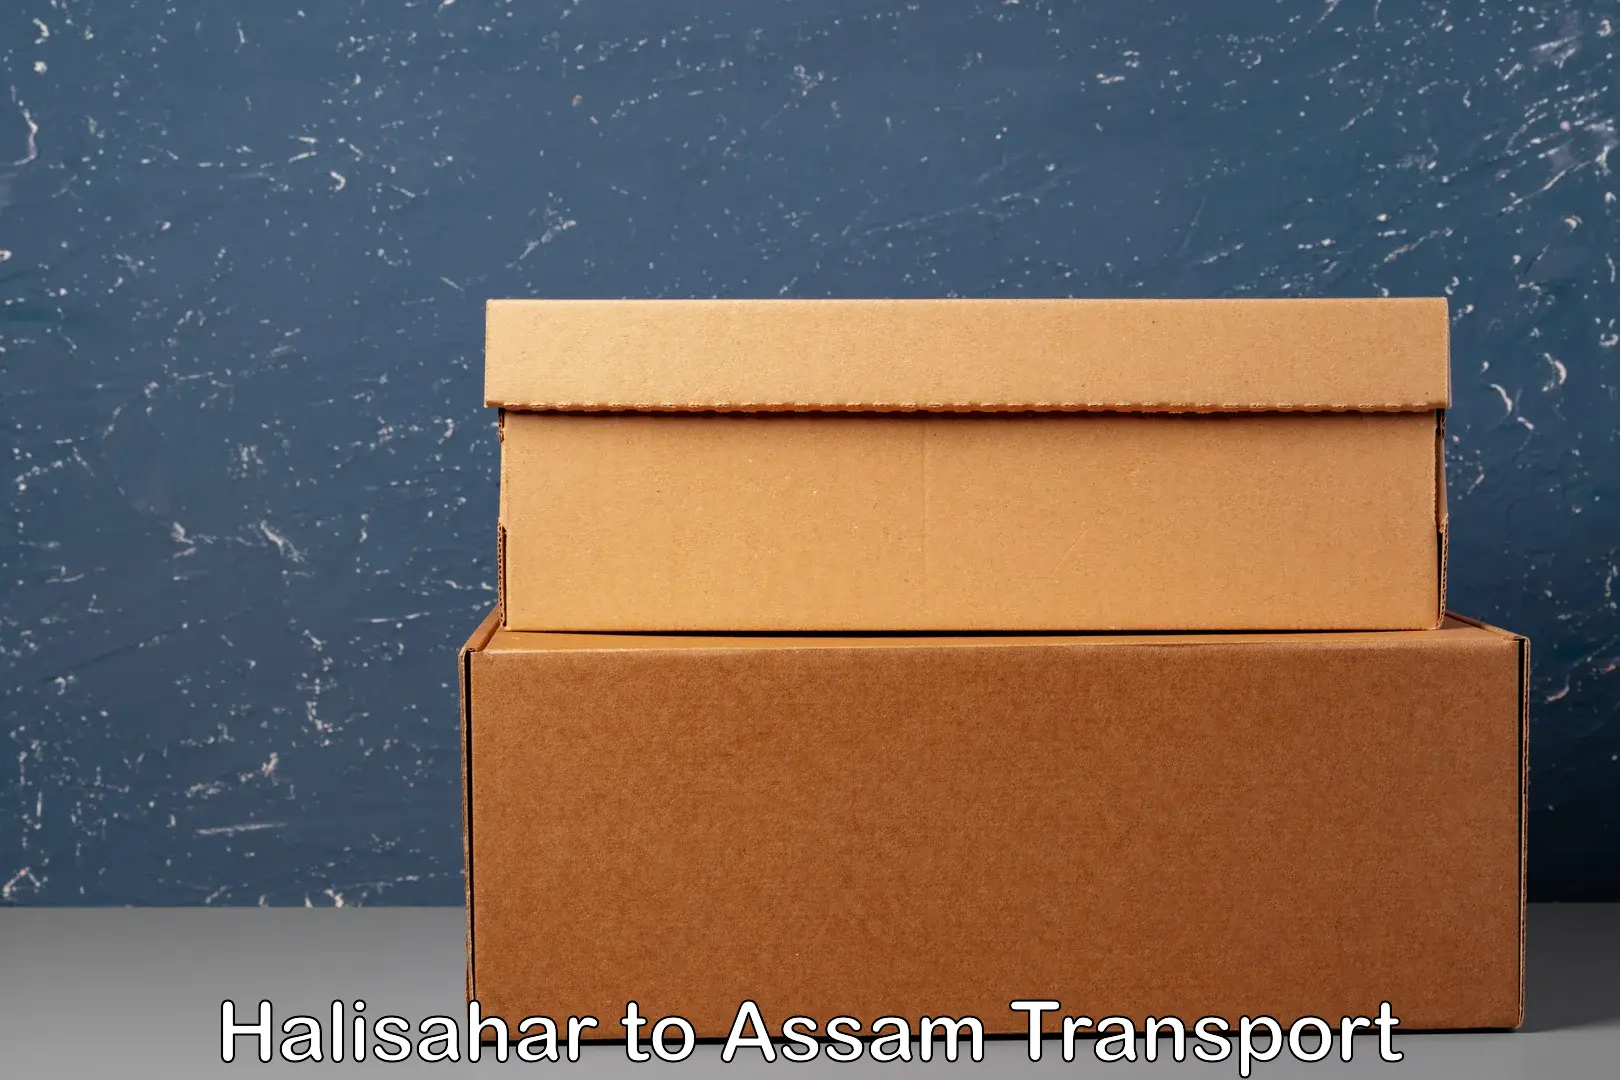 Sending bike to another city Halisahar to Assam